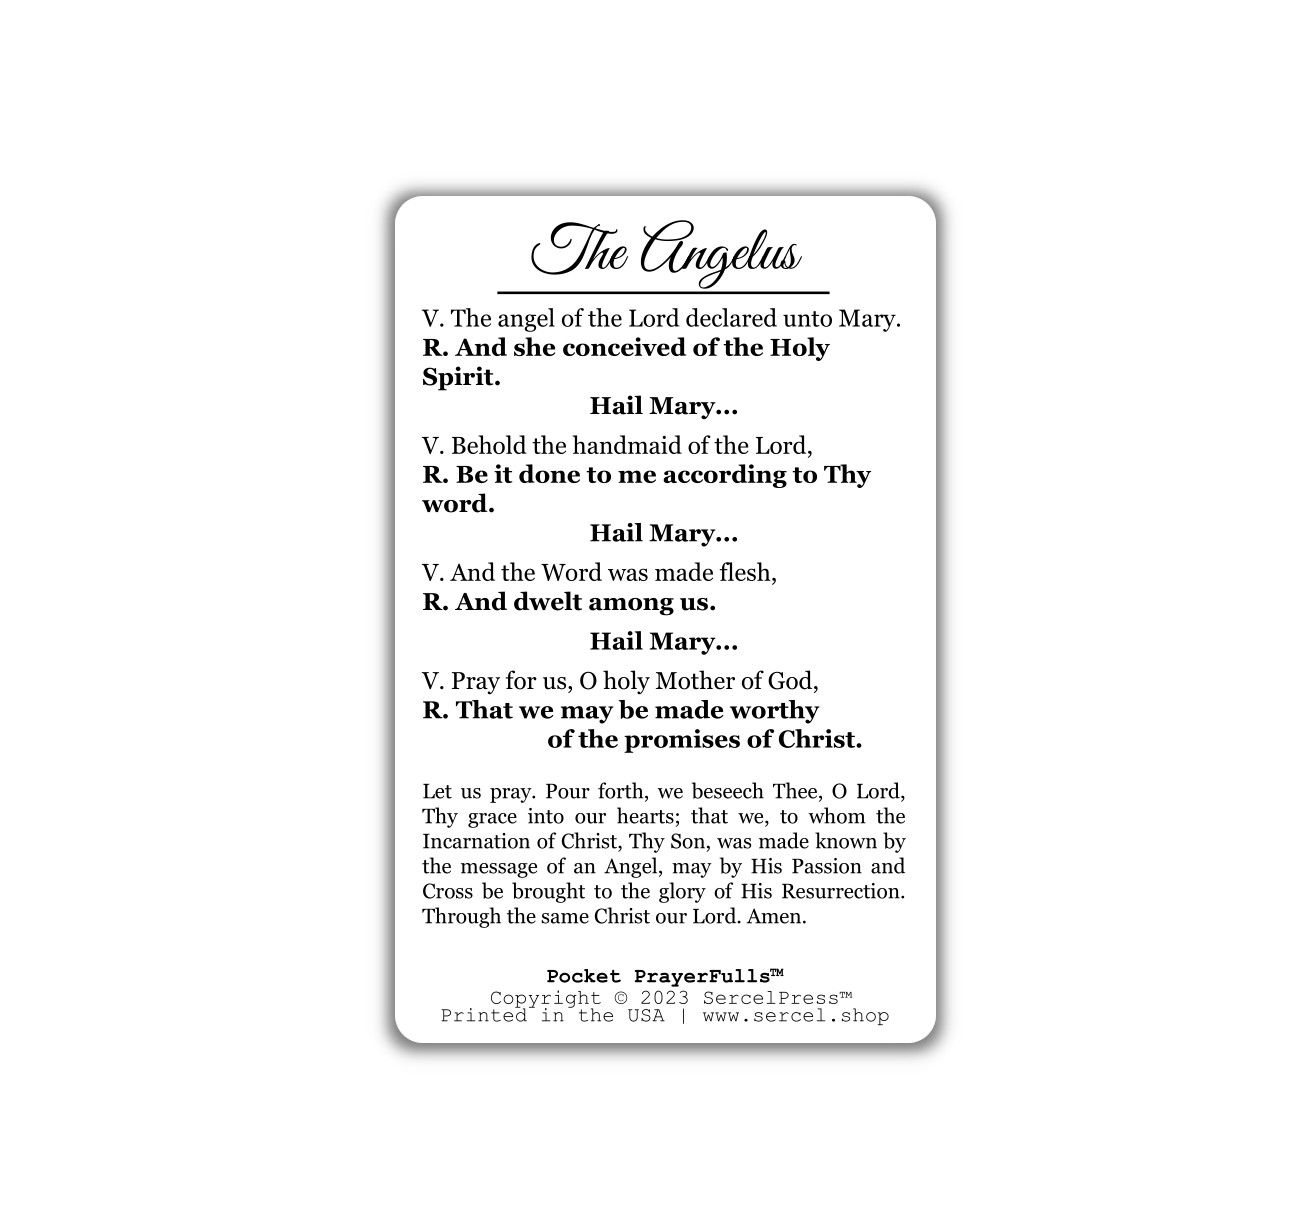 The Angelus: Pocket PrayerFulls™ | Durable Wallet Prayer Cards | Catholic Prayers